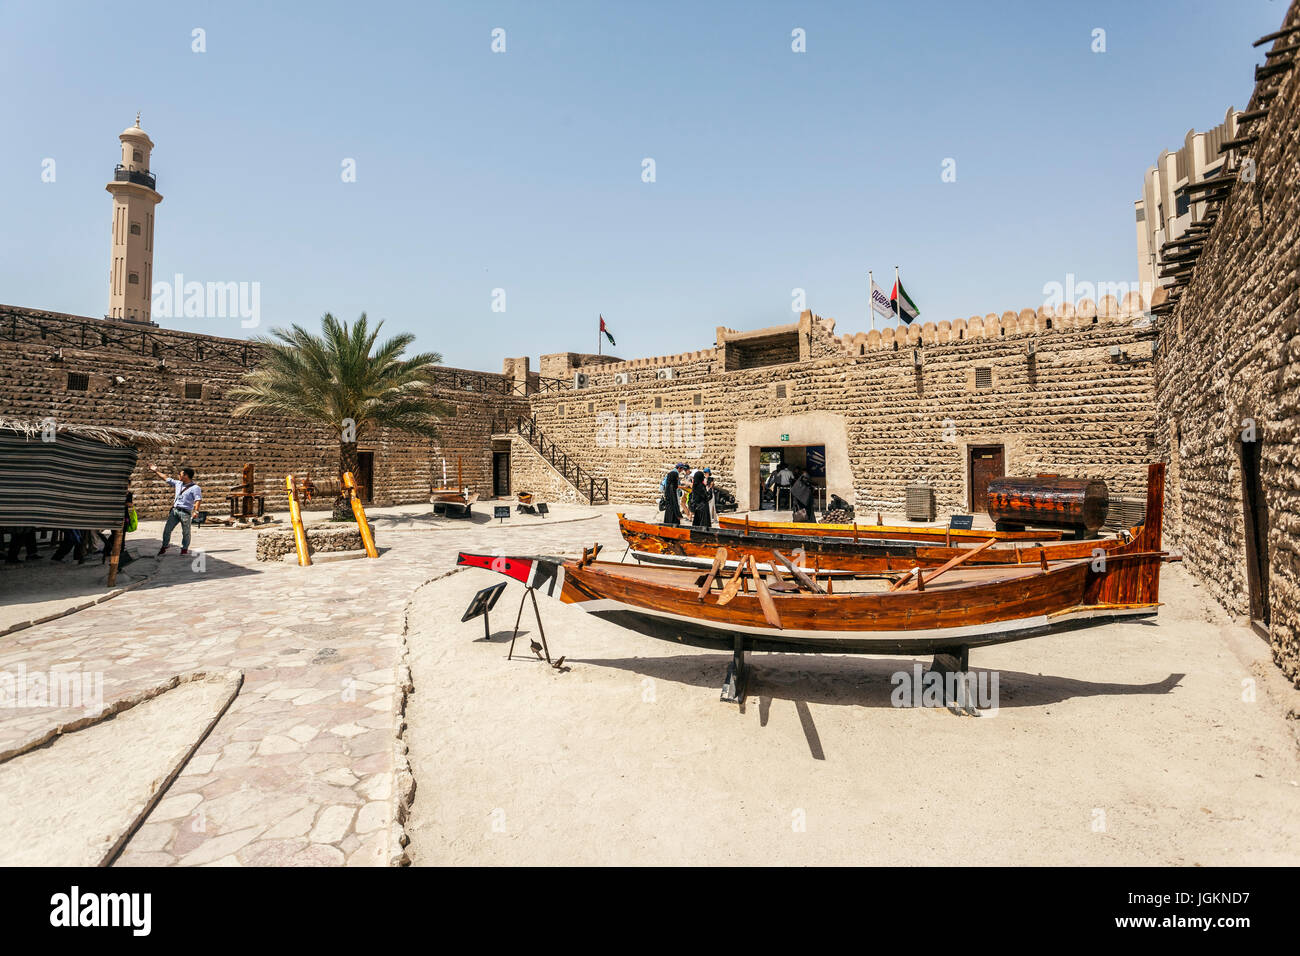 Boat exposition in the courtyard of Dubai Museum, Al Fahidi Fort, Bur Dubai, United Arab Emirates, Middle East Stock Photo